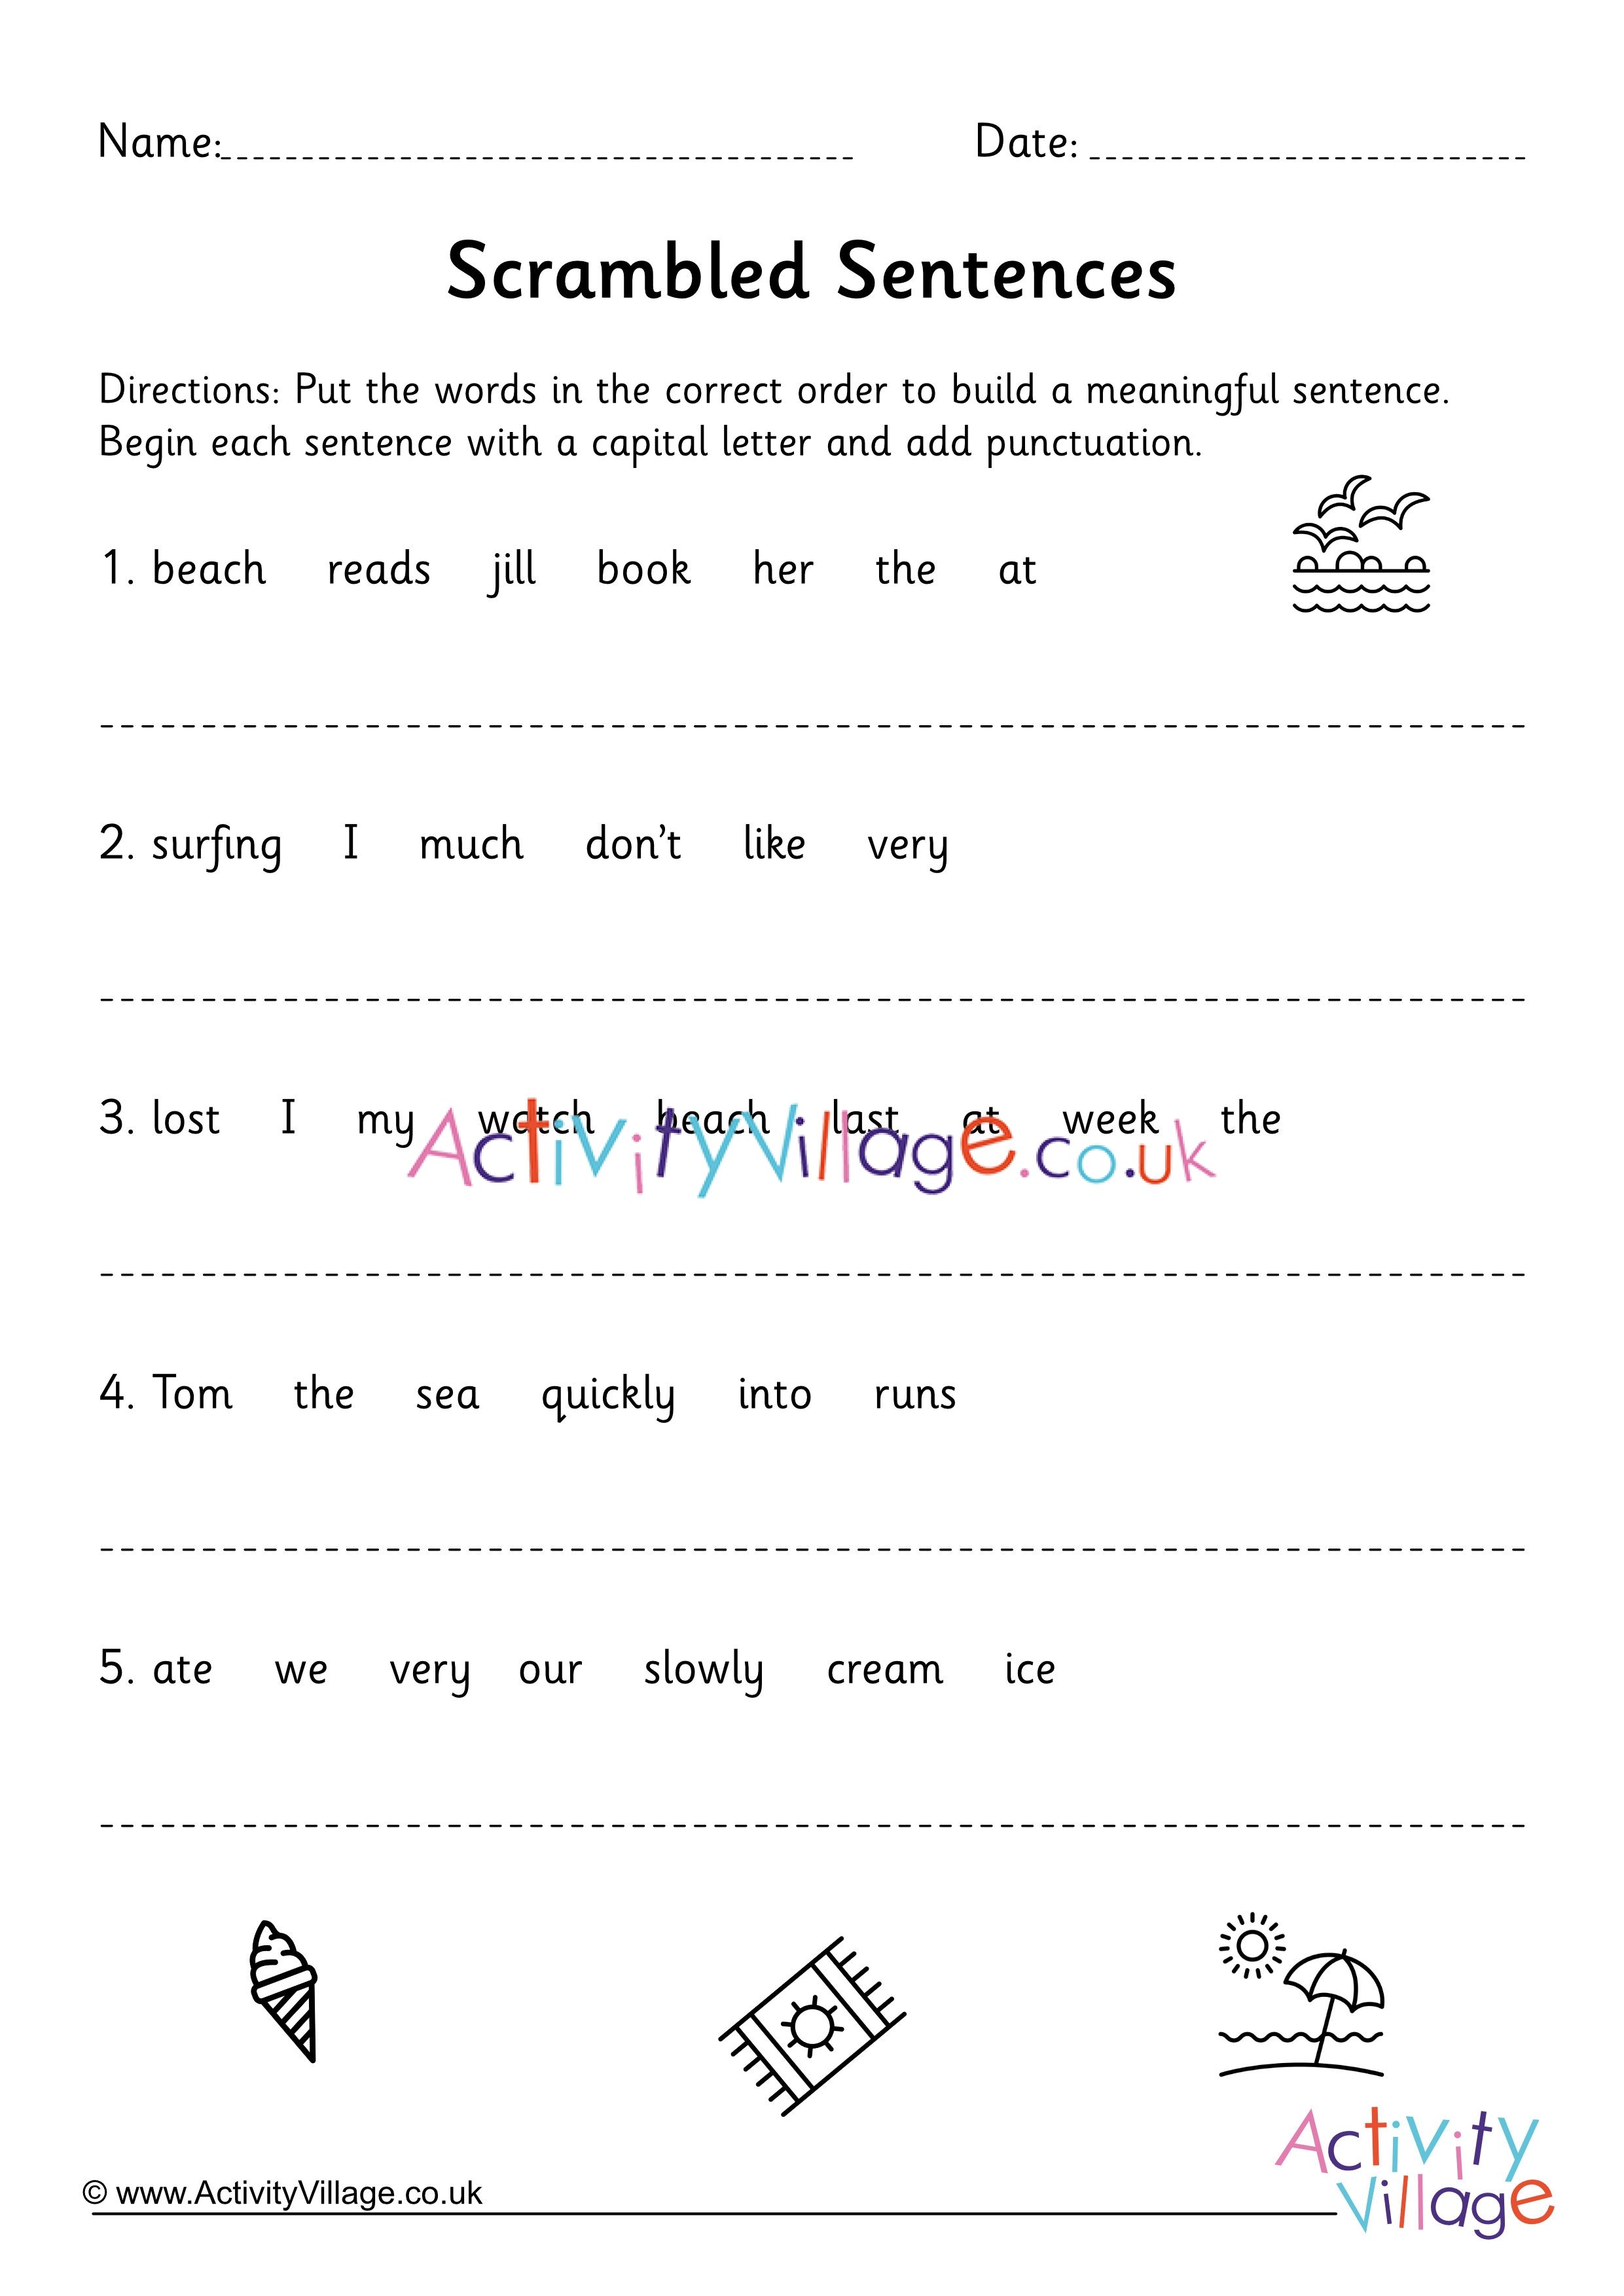 kindergarten-scrambled-sentences-worksheets